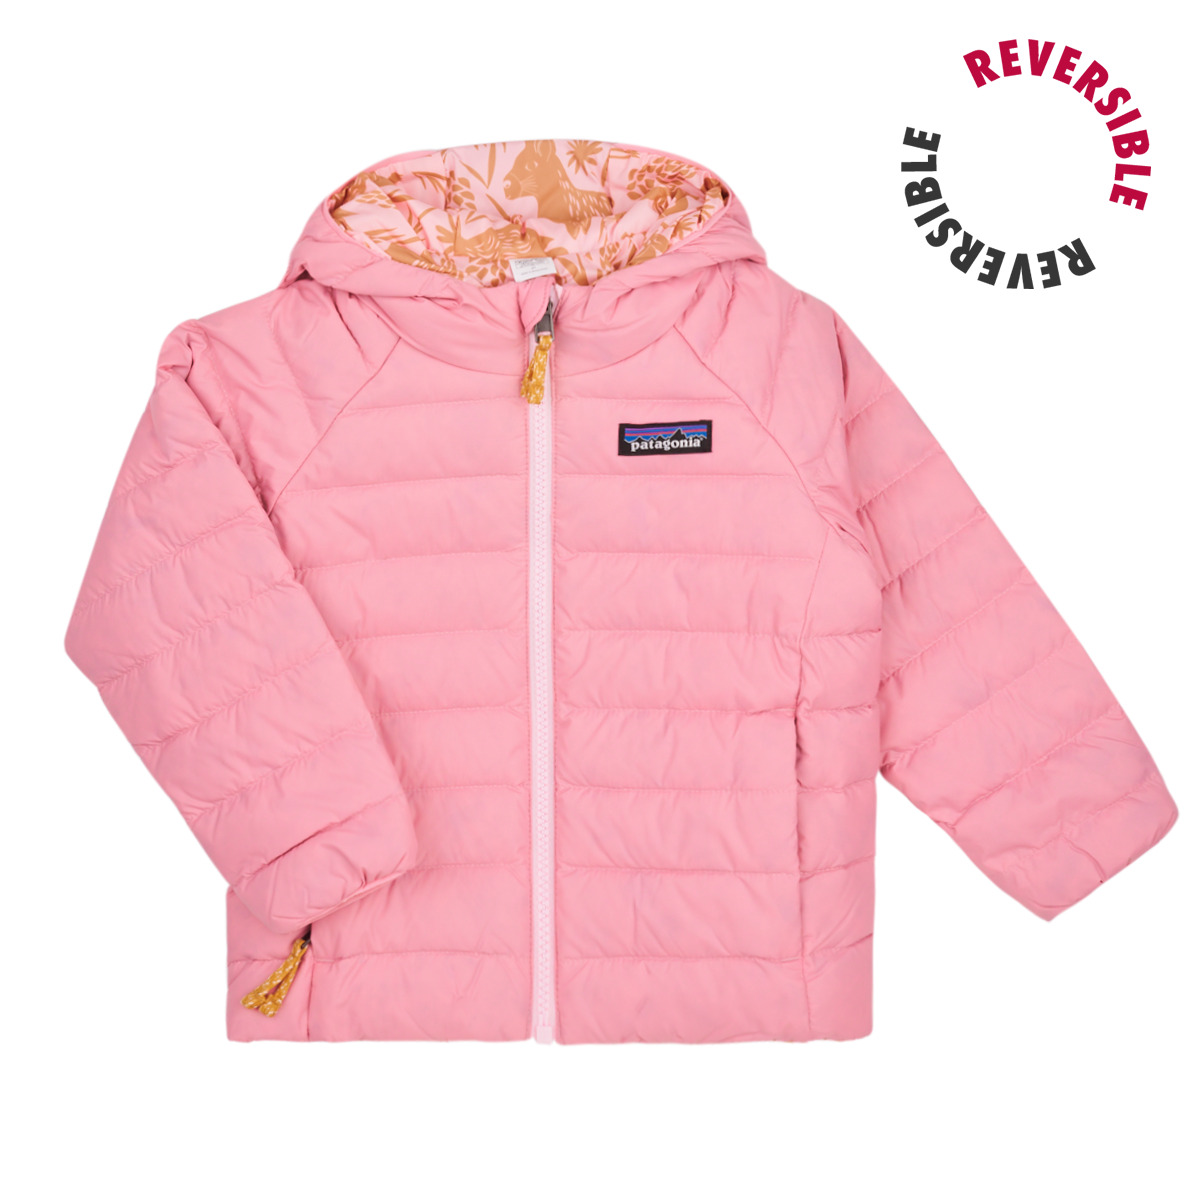 patagonia  baby reversible down sweater hoody  girls's children's jacket in pink